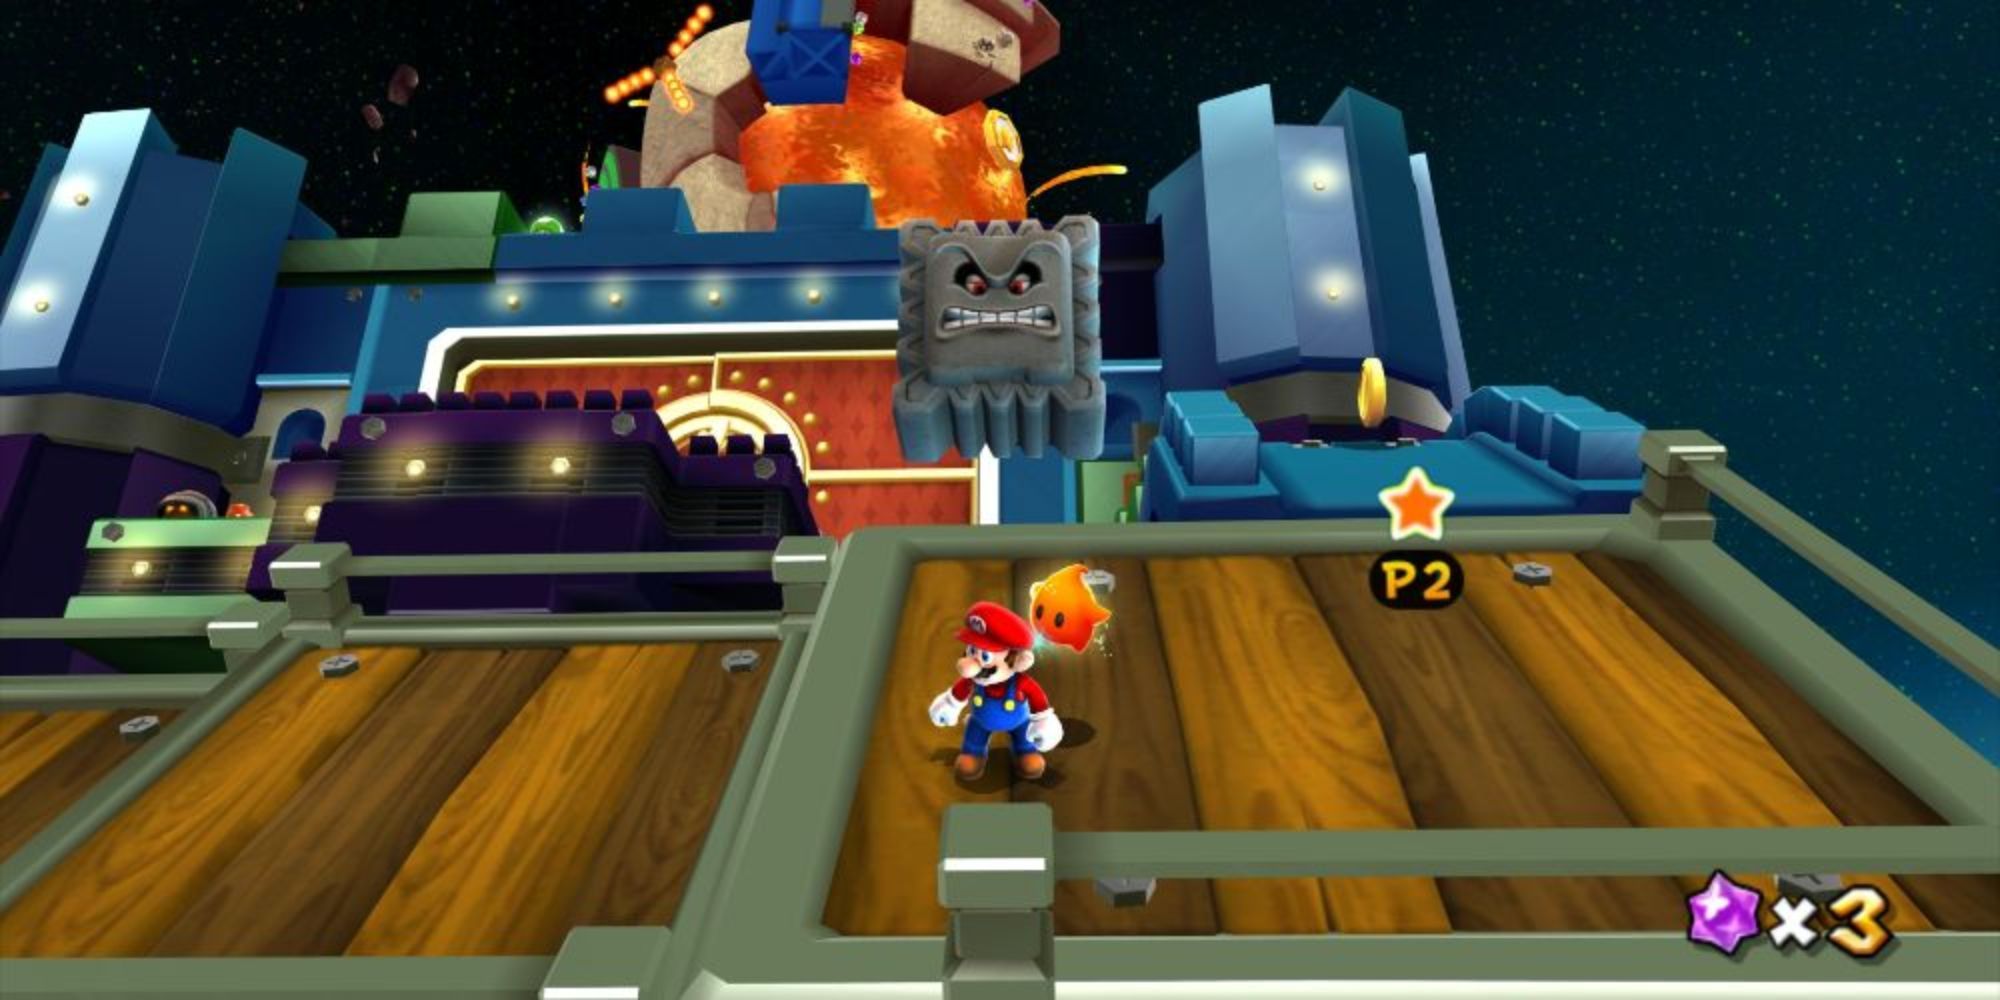 Mario and a Luma in Super Mario Galaxy 2